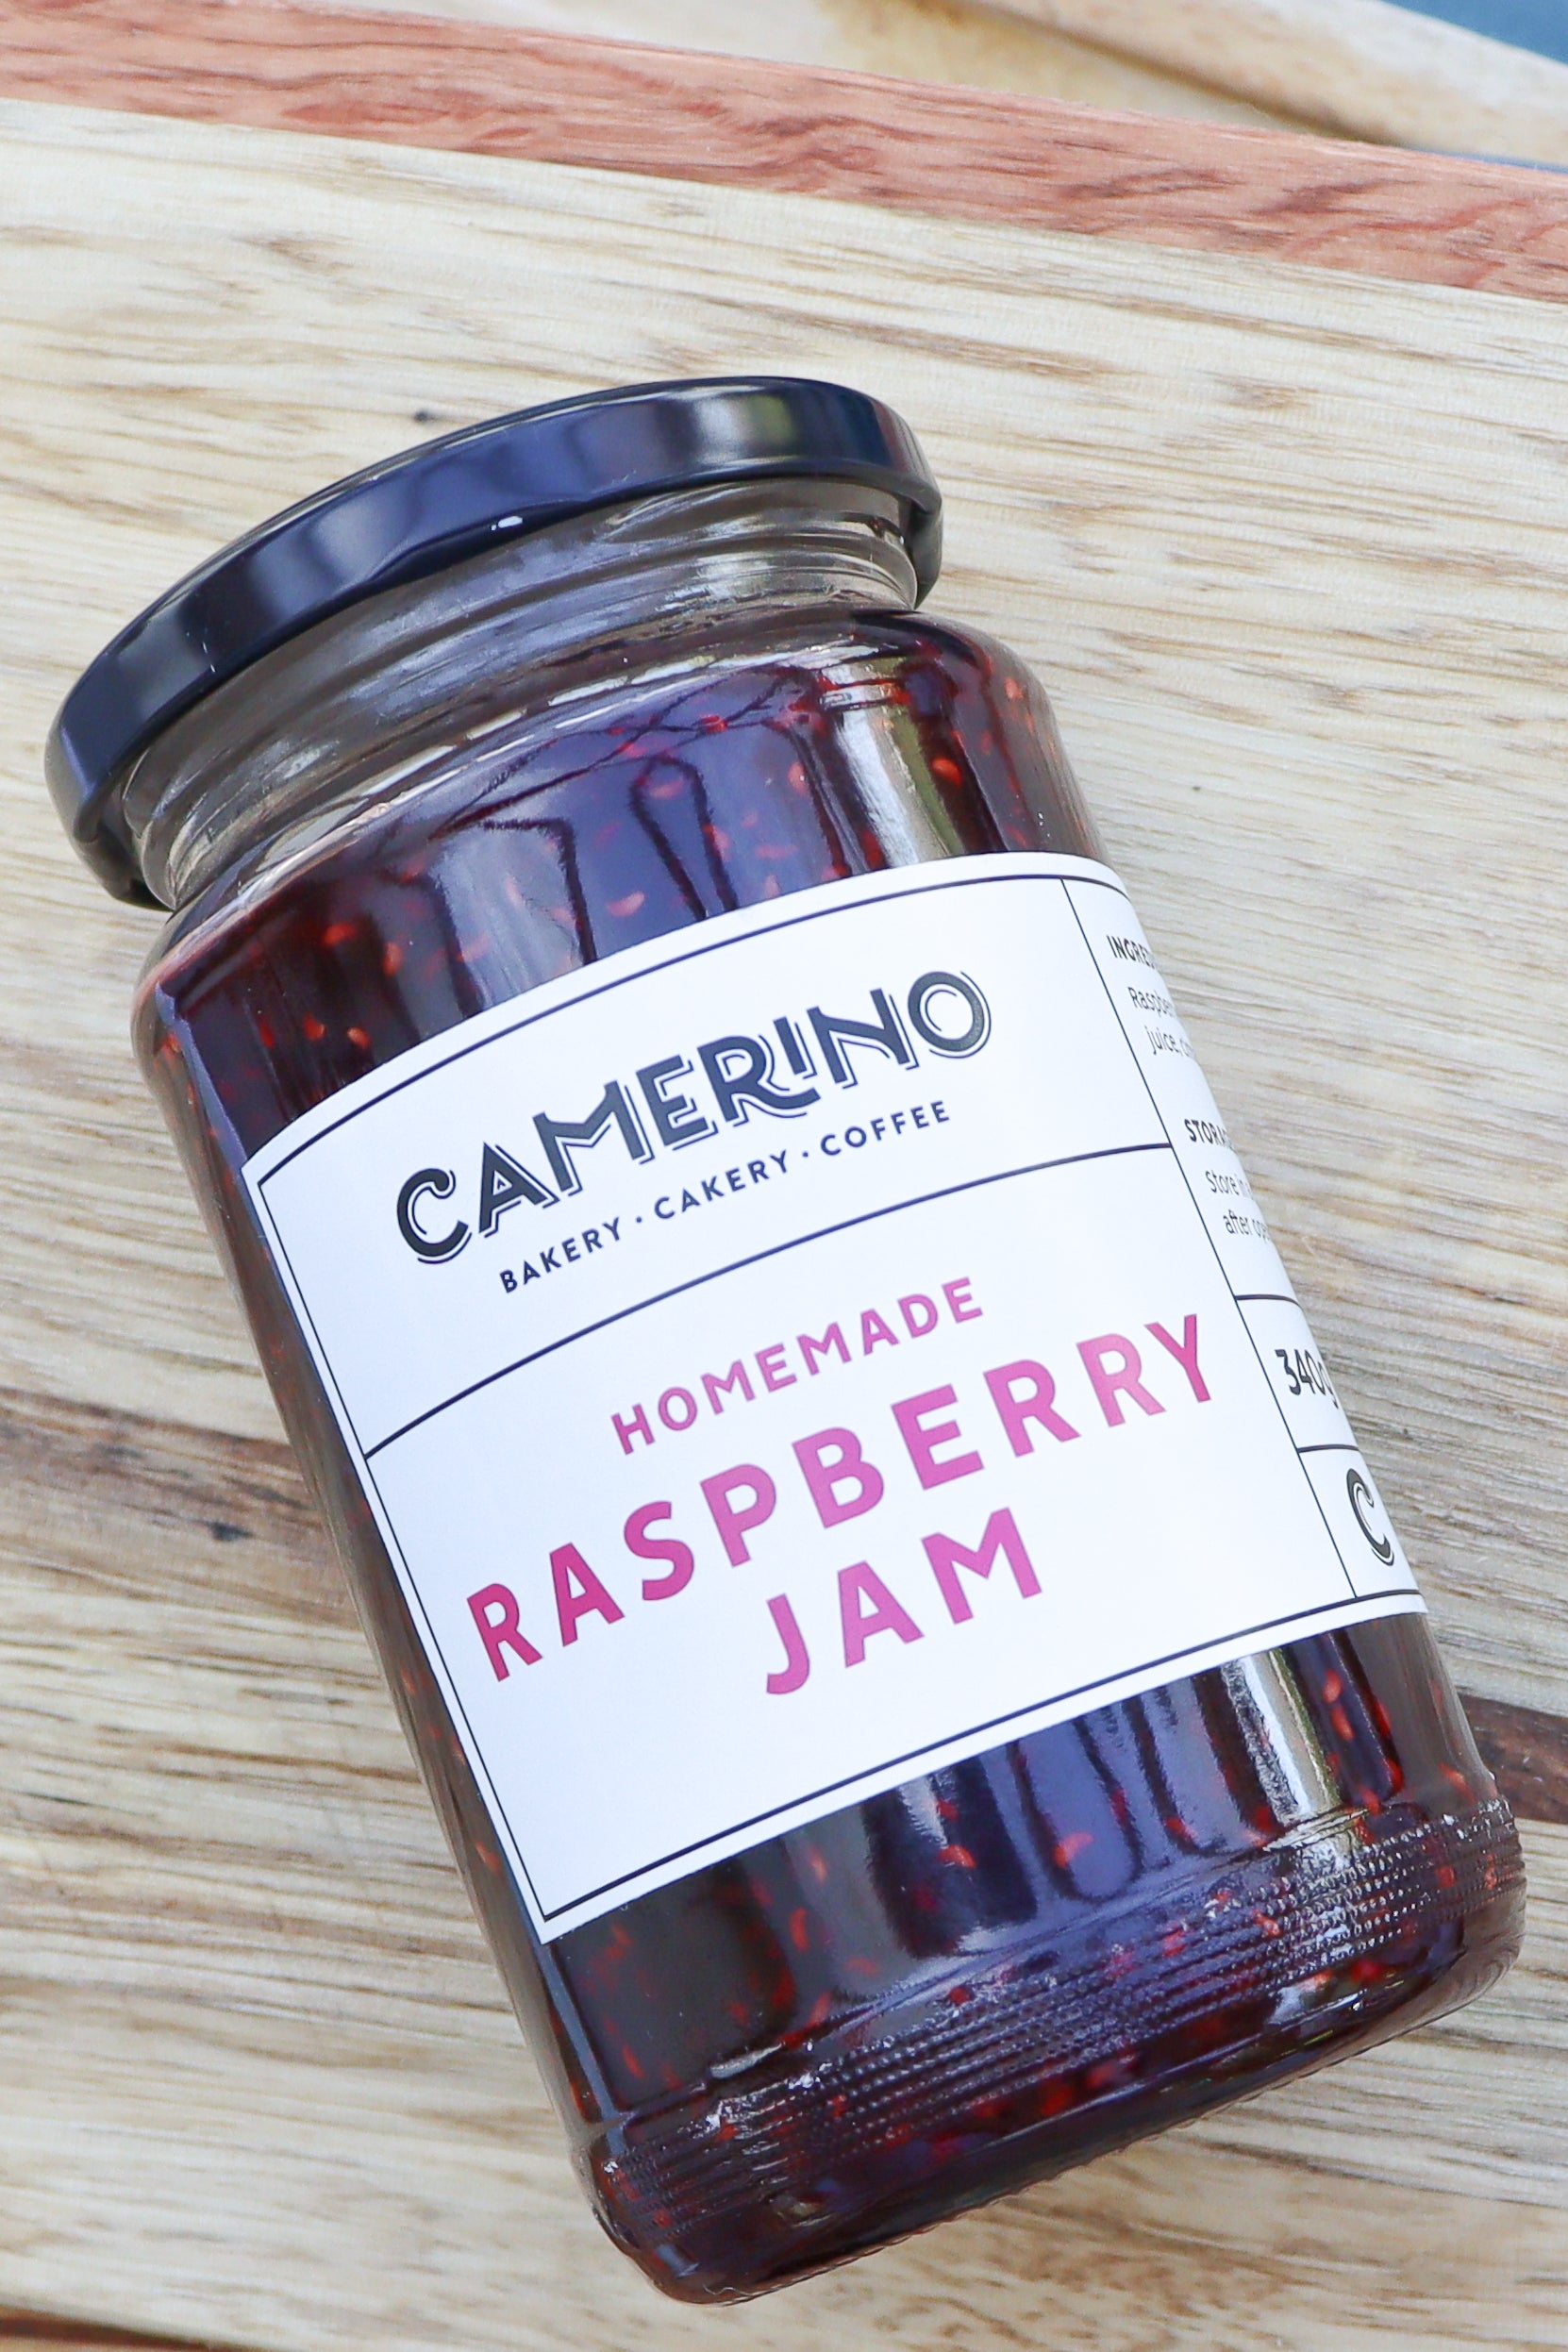 Raspberry Jam by Camerino Bakery